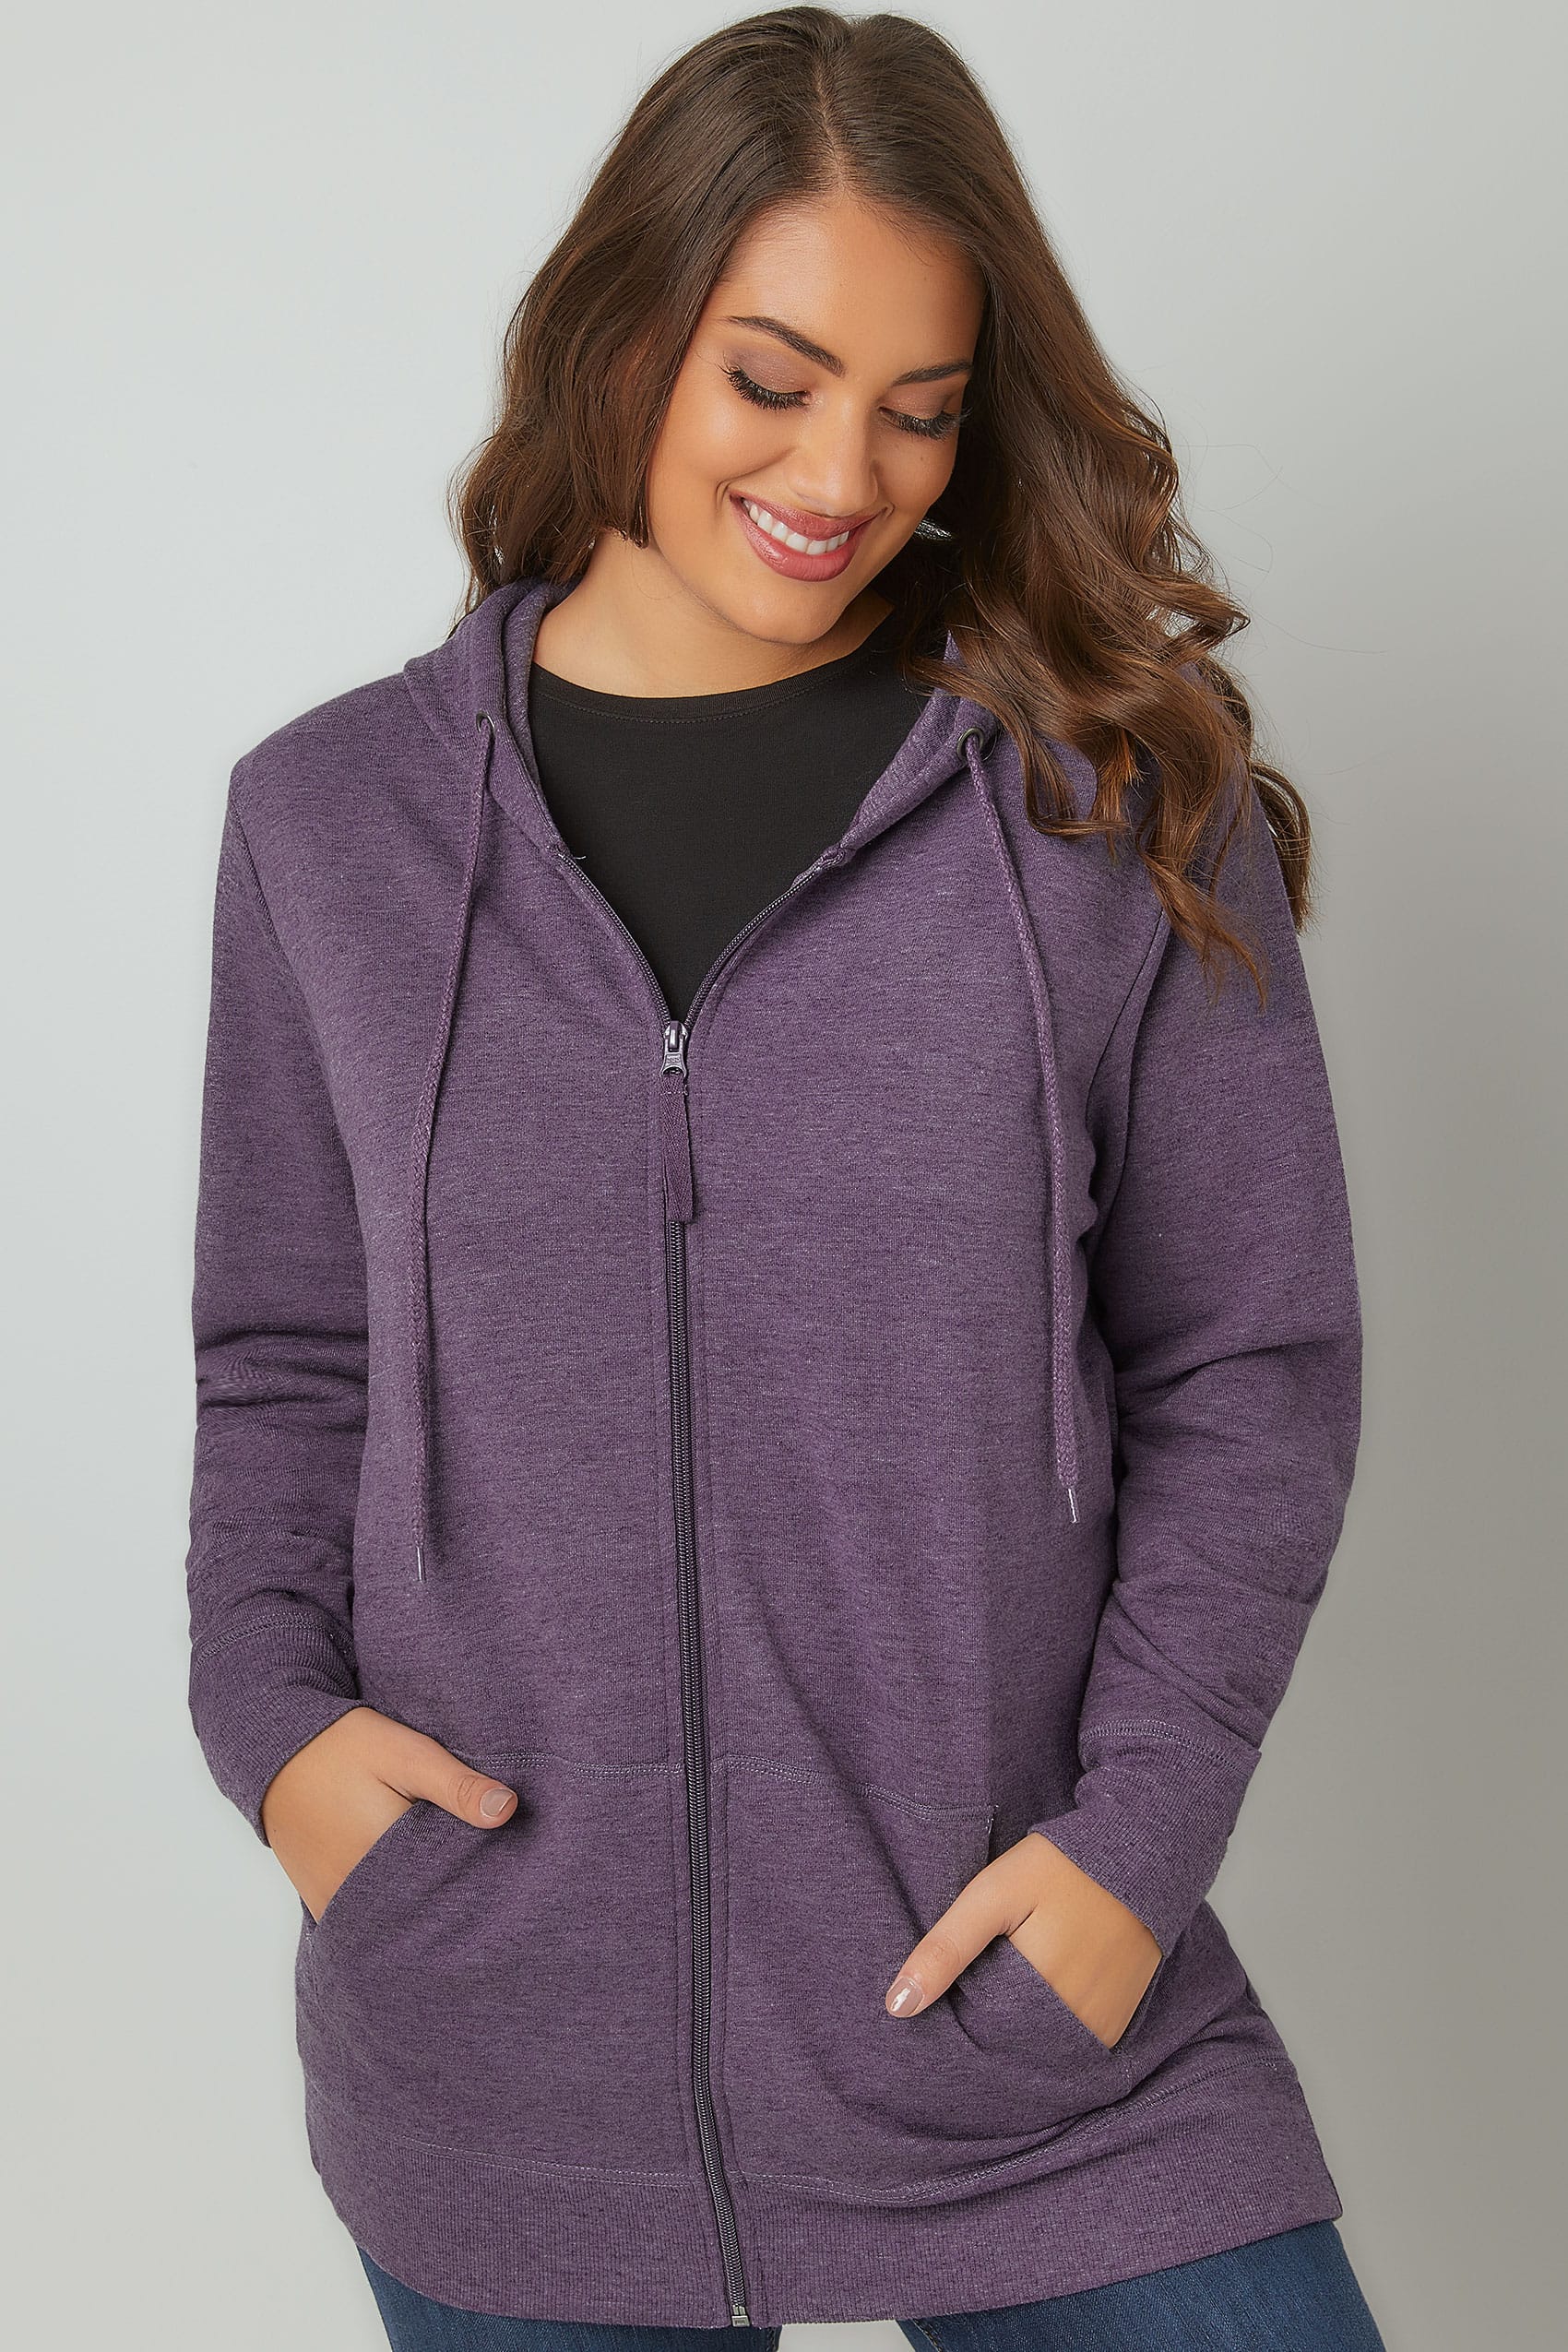 purple hoodie for women